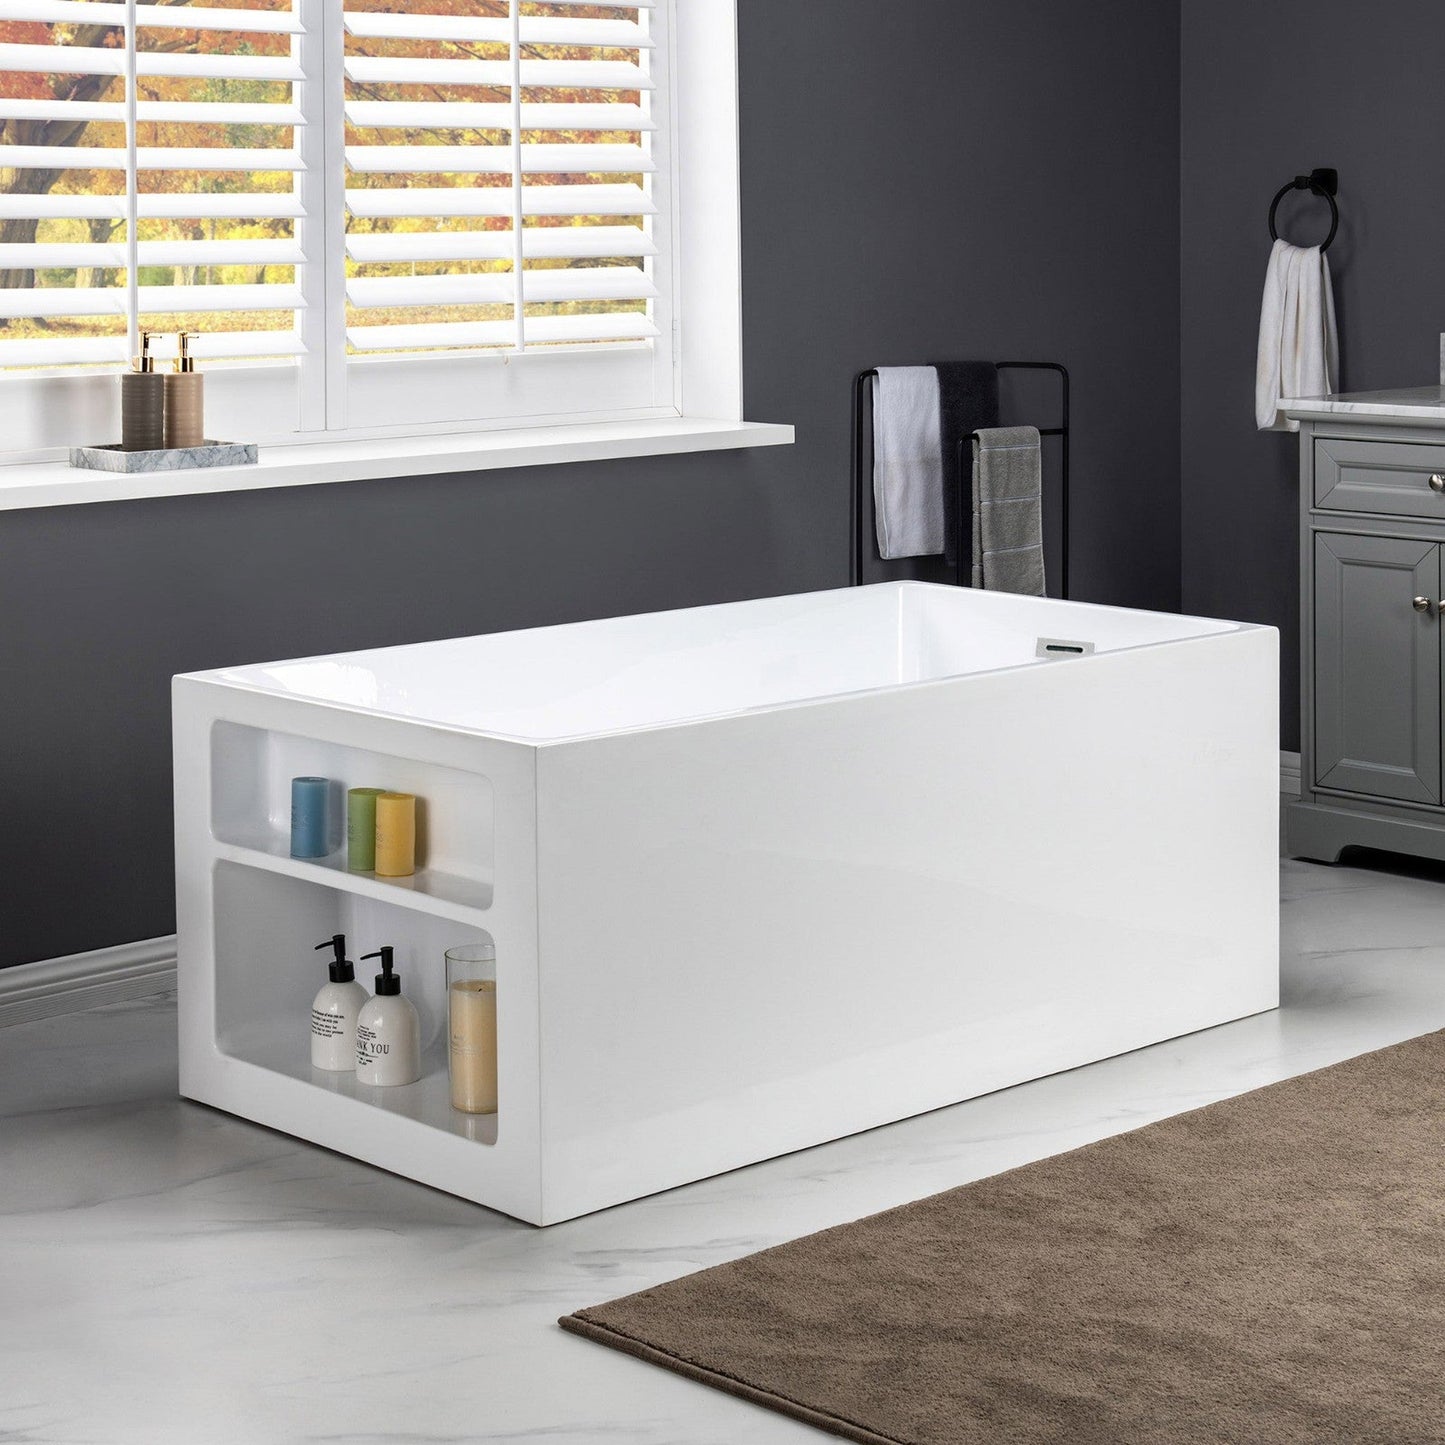 WoodBridge BTA0081 59" White Acrylic Freestanding Soaking Bathtub With Chrome Overflow and Drain